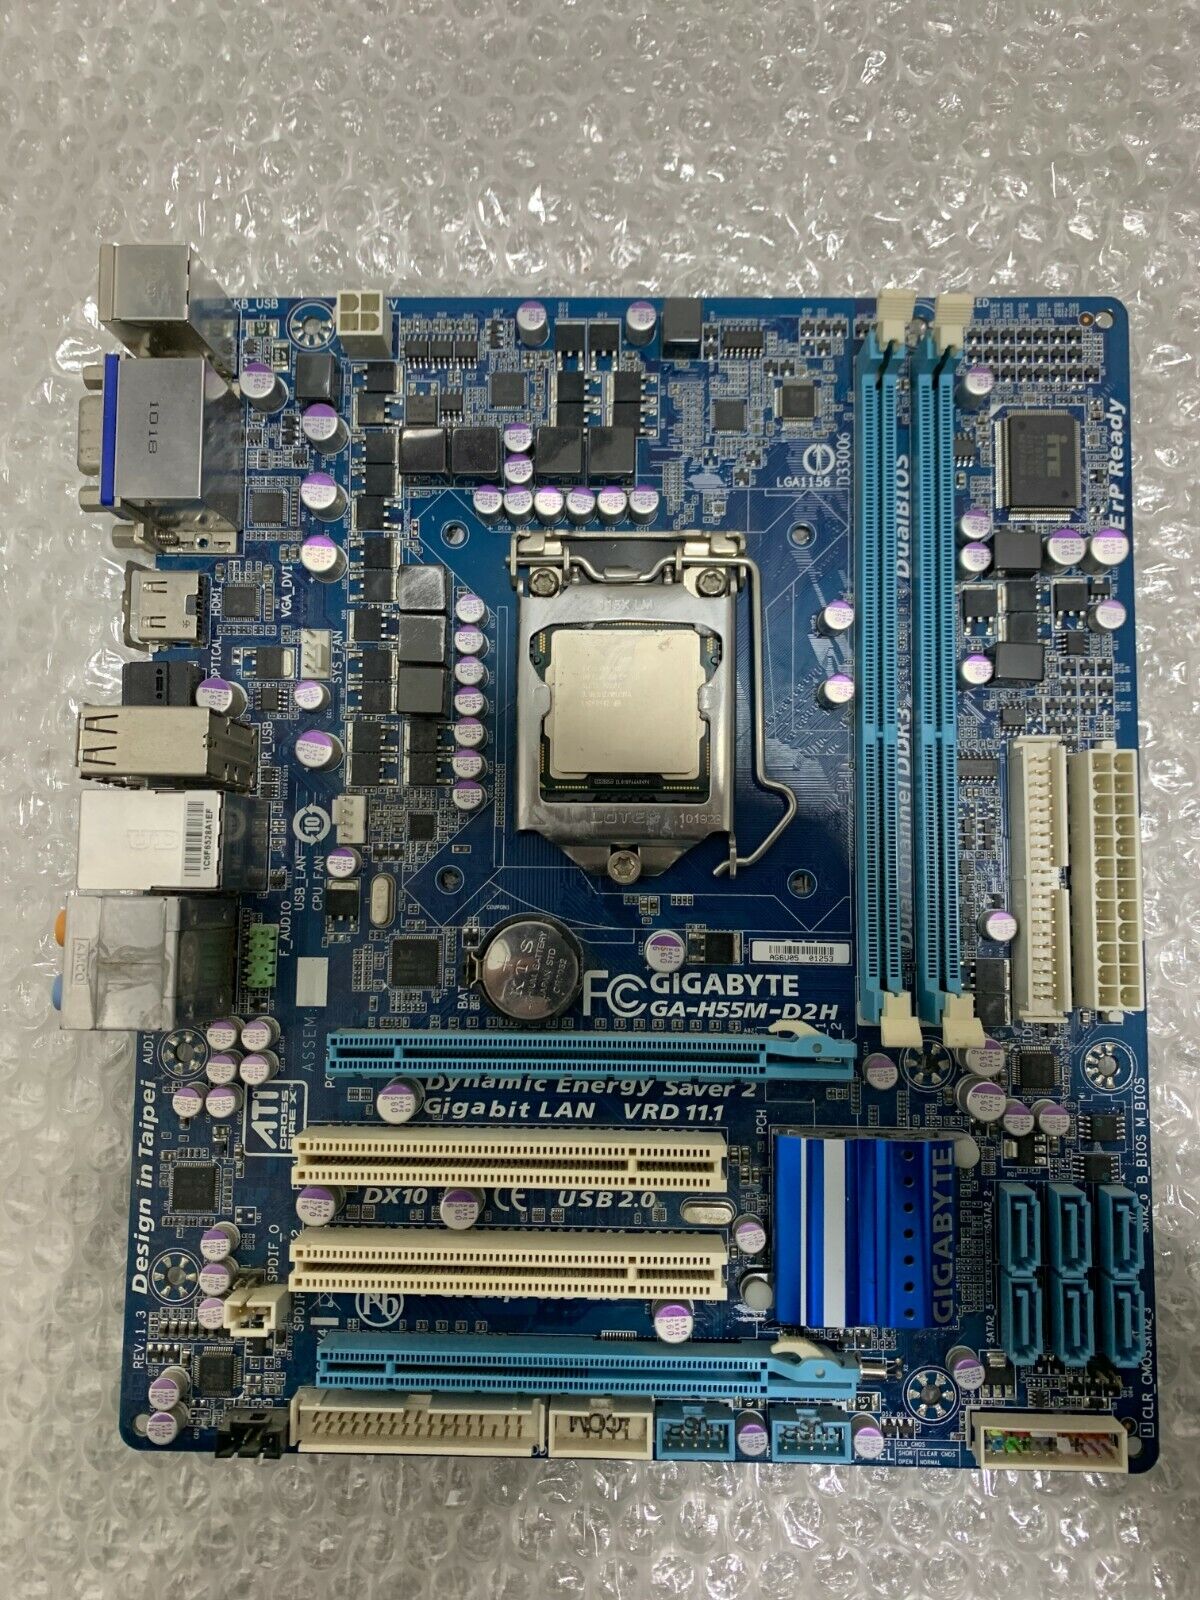 Motherboard Gigabyte GA-H55M-D2H REV: 1.3 DDR3 LGA1156 + CPU Intel I3-540 SLBTD